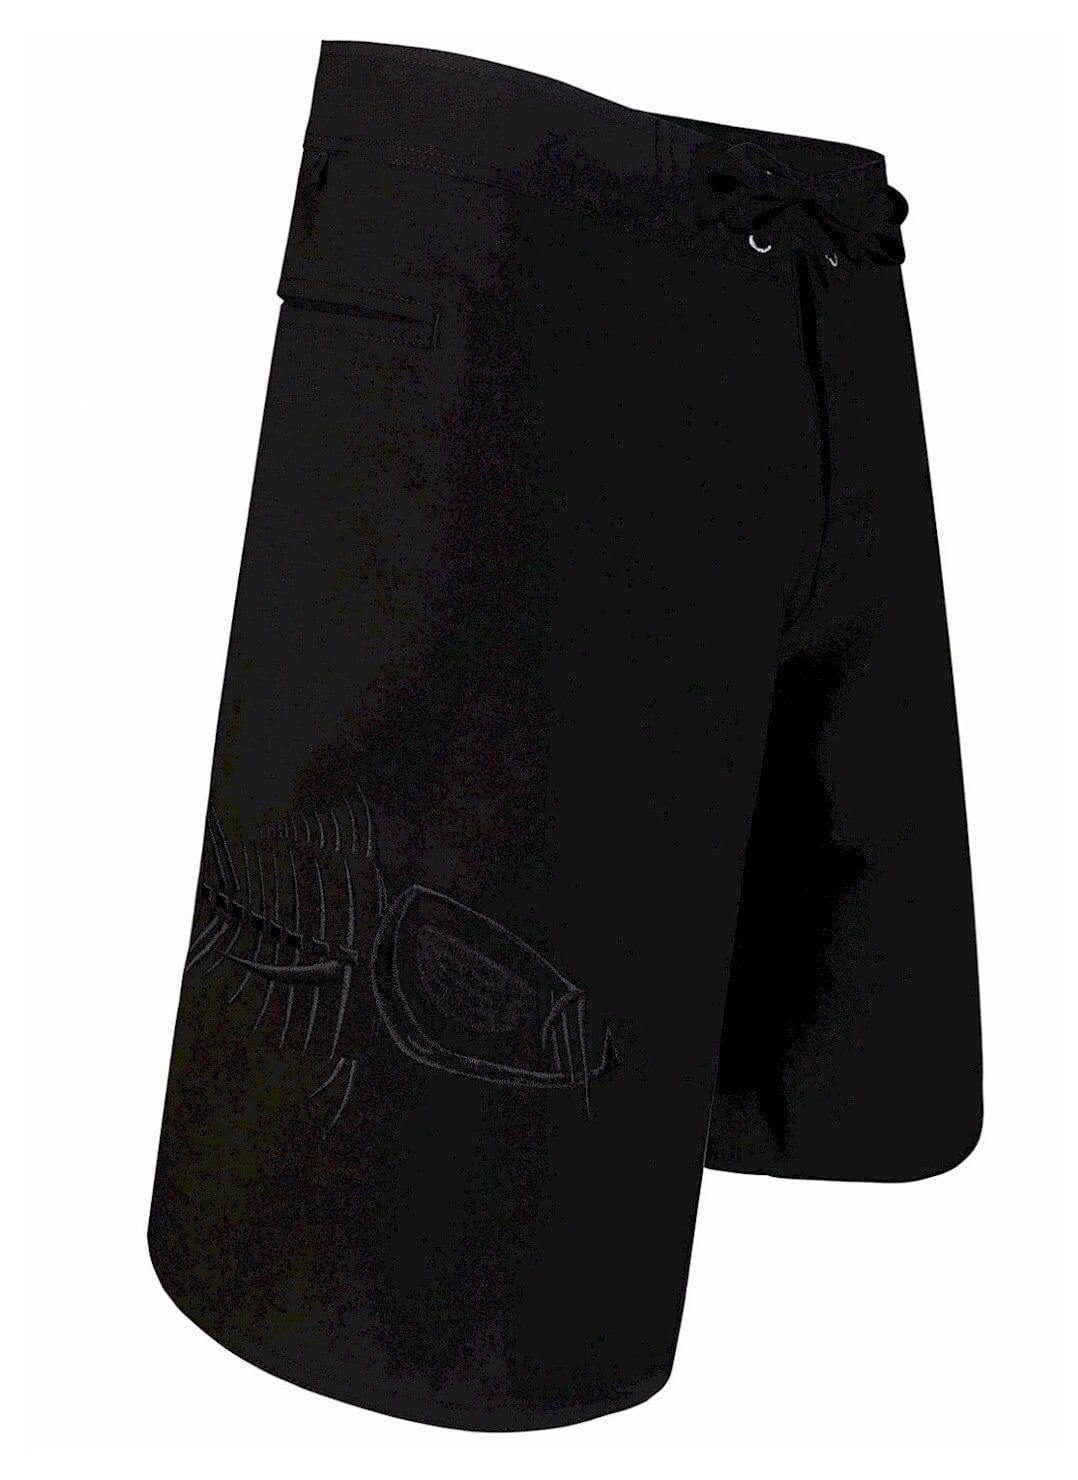 Black on Black Waterman 5 Pocket Board Shorts